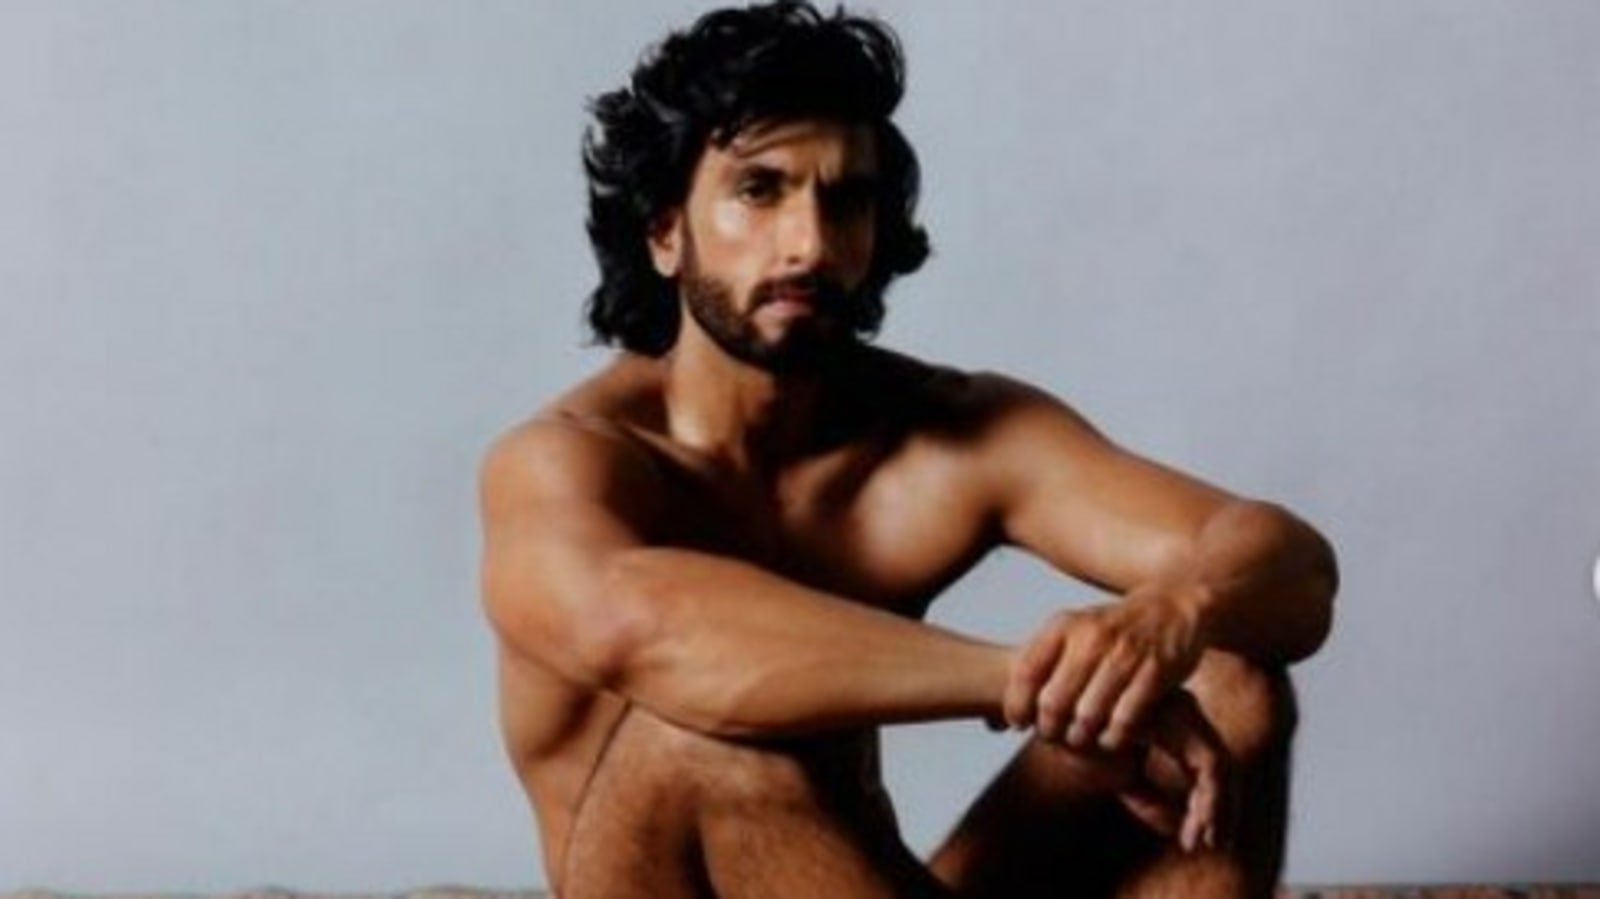 Priyankagandhi Nude - Masaba Gupta calls Ranveer Singh's nude shoot 'best cover shot' India has  seen | Bollywood - Hindustan Times